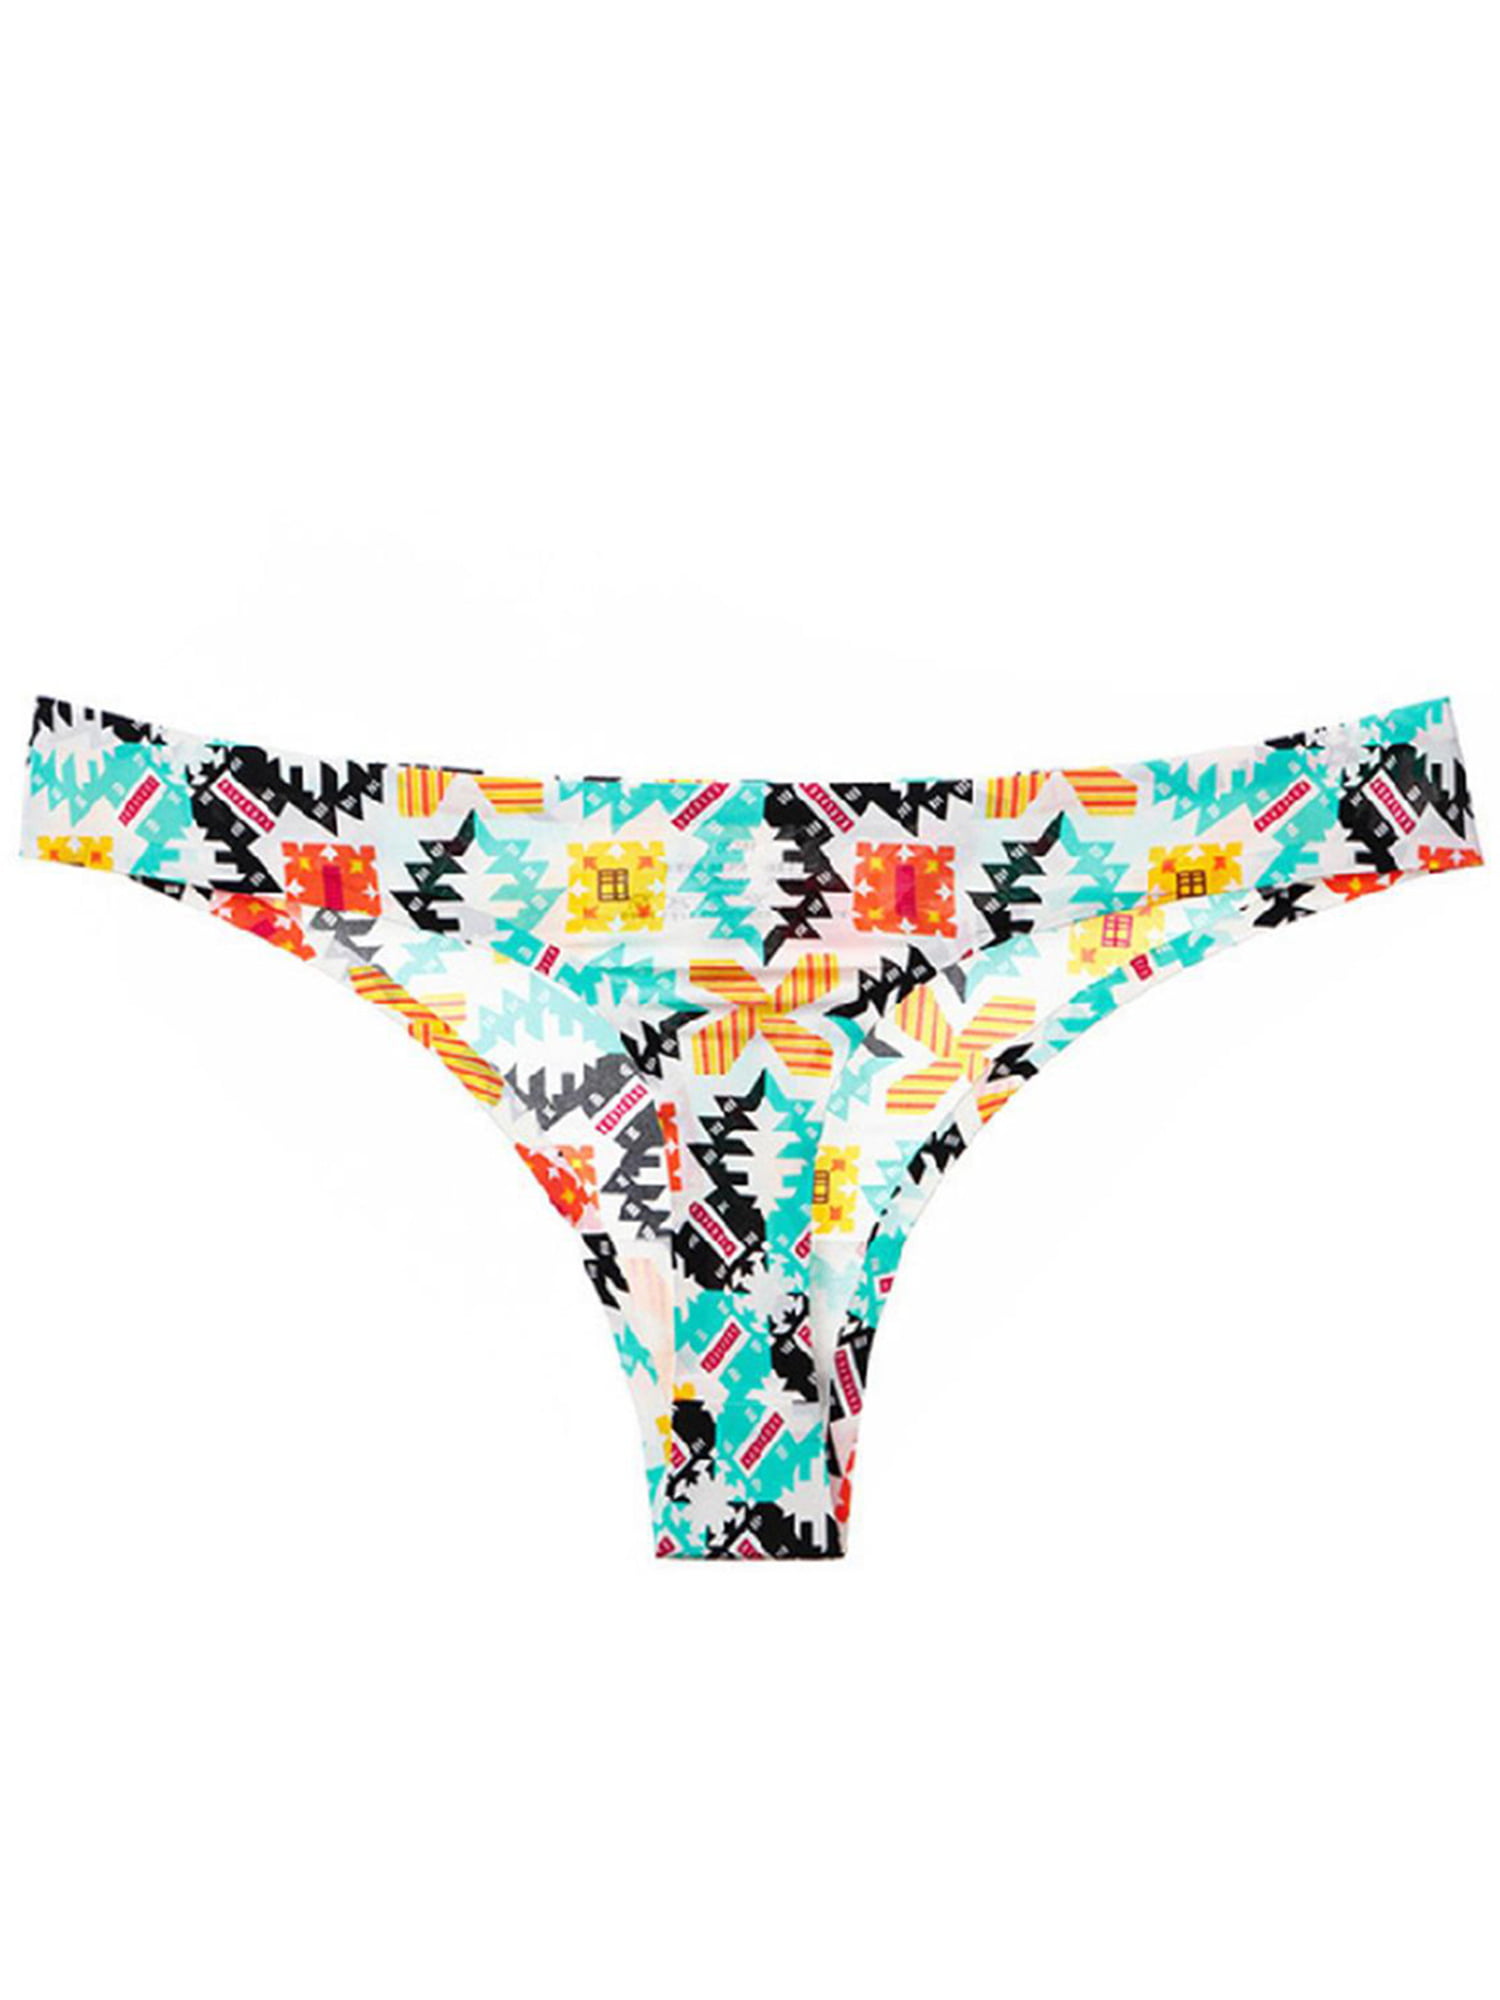 Laura Women's Thong Underwear Mesh Over Fabric Lace Trim S M L Super Comfy 